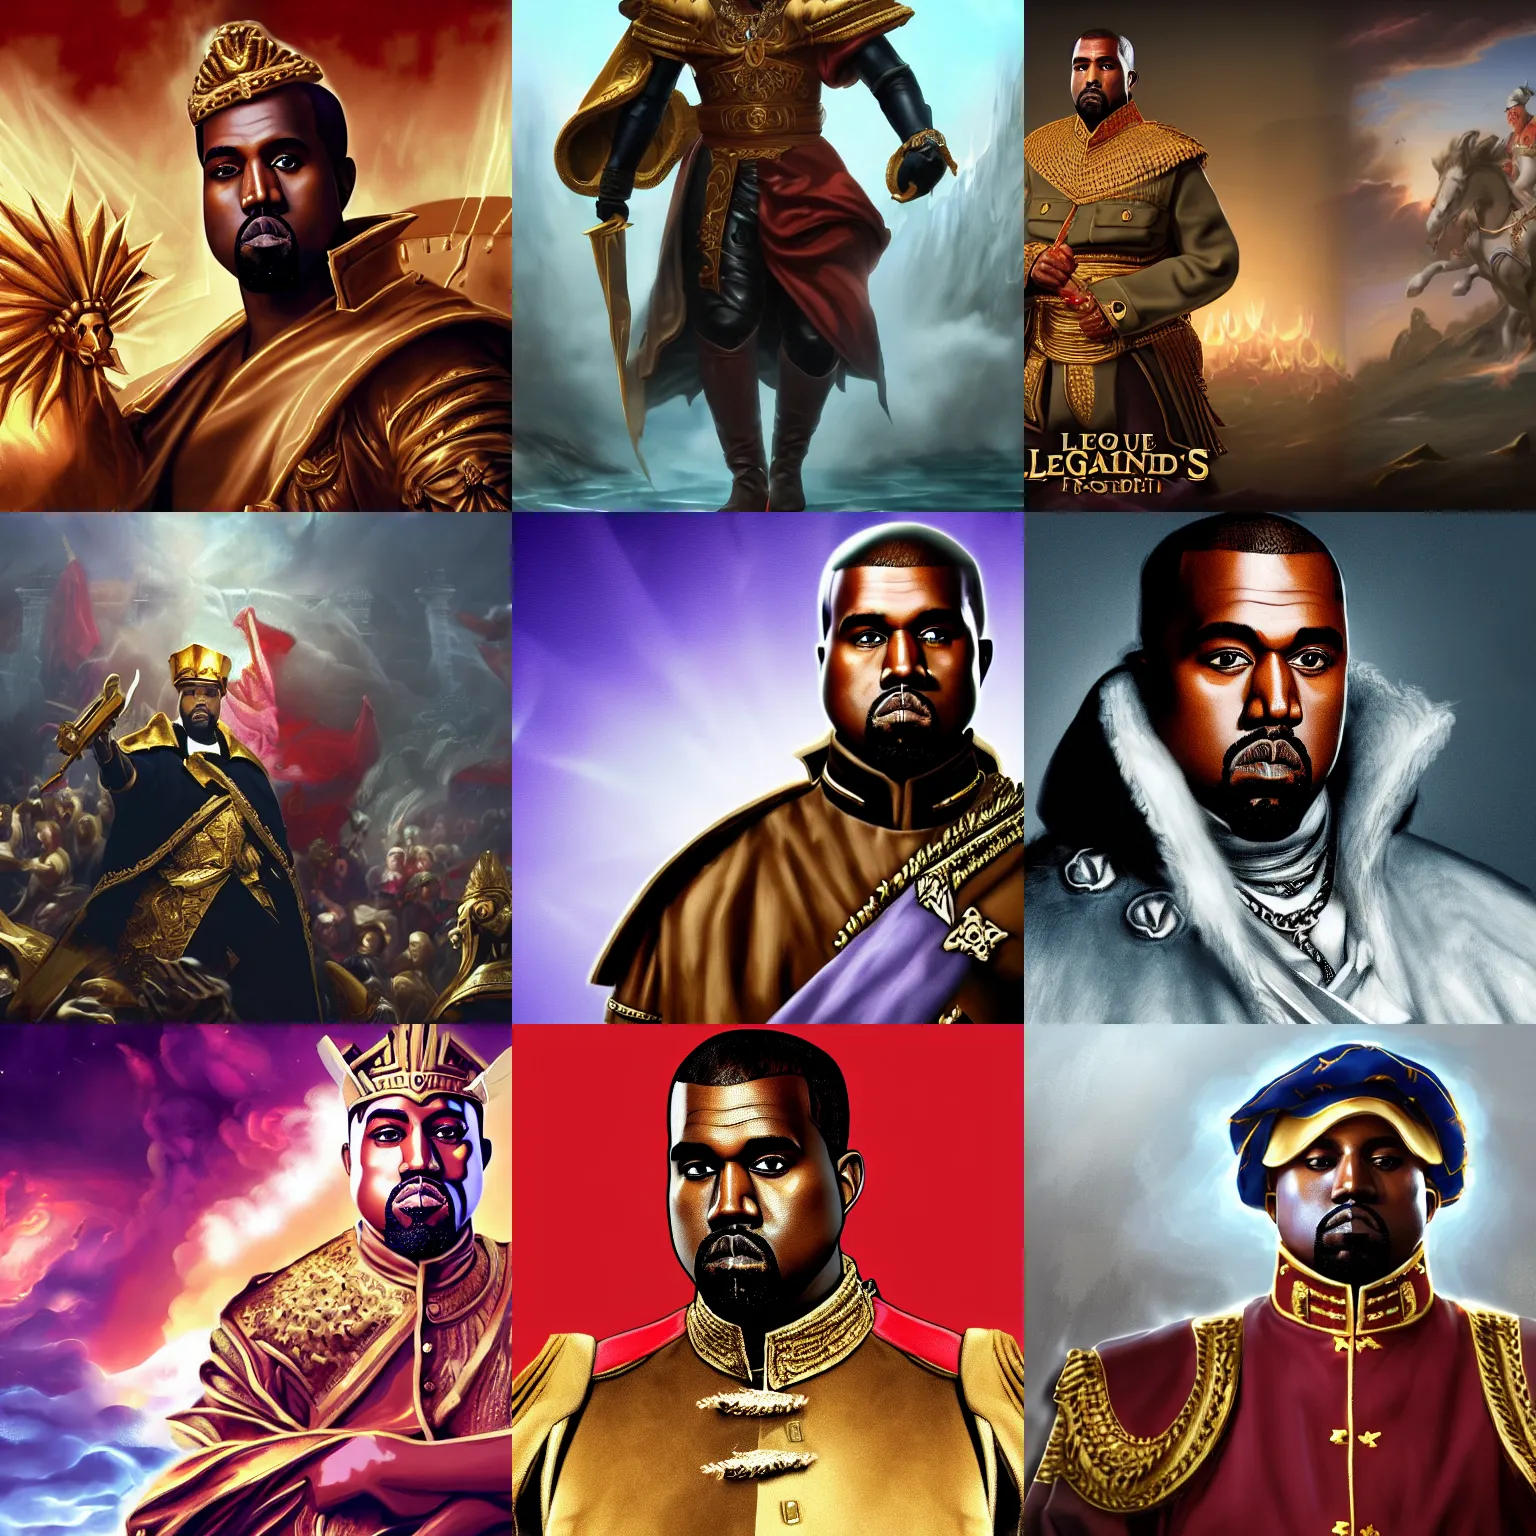 Prompt: Kanye West as emperor napoleon, League of Legends amazing splashscreen artwork, splash art, hd wallpaper, ultra high details, artstation, no text